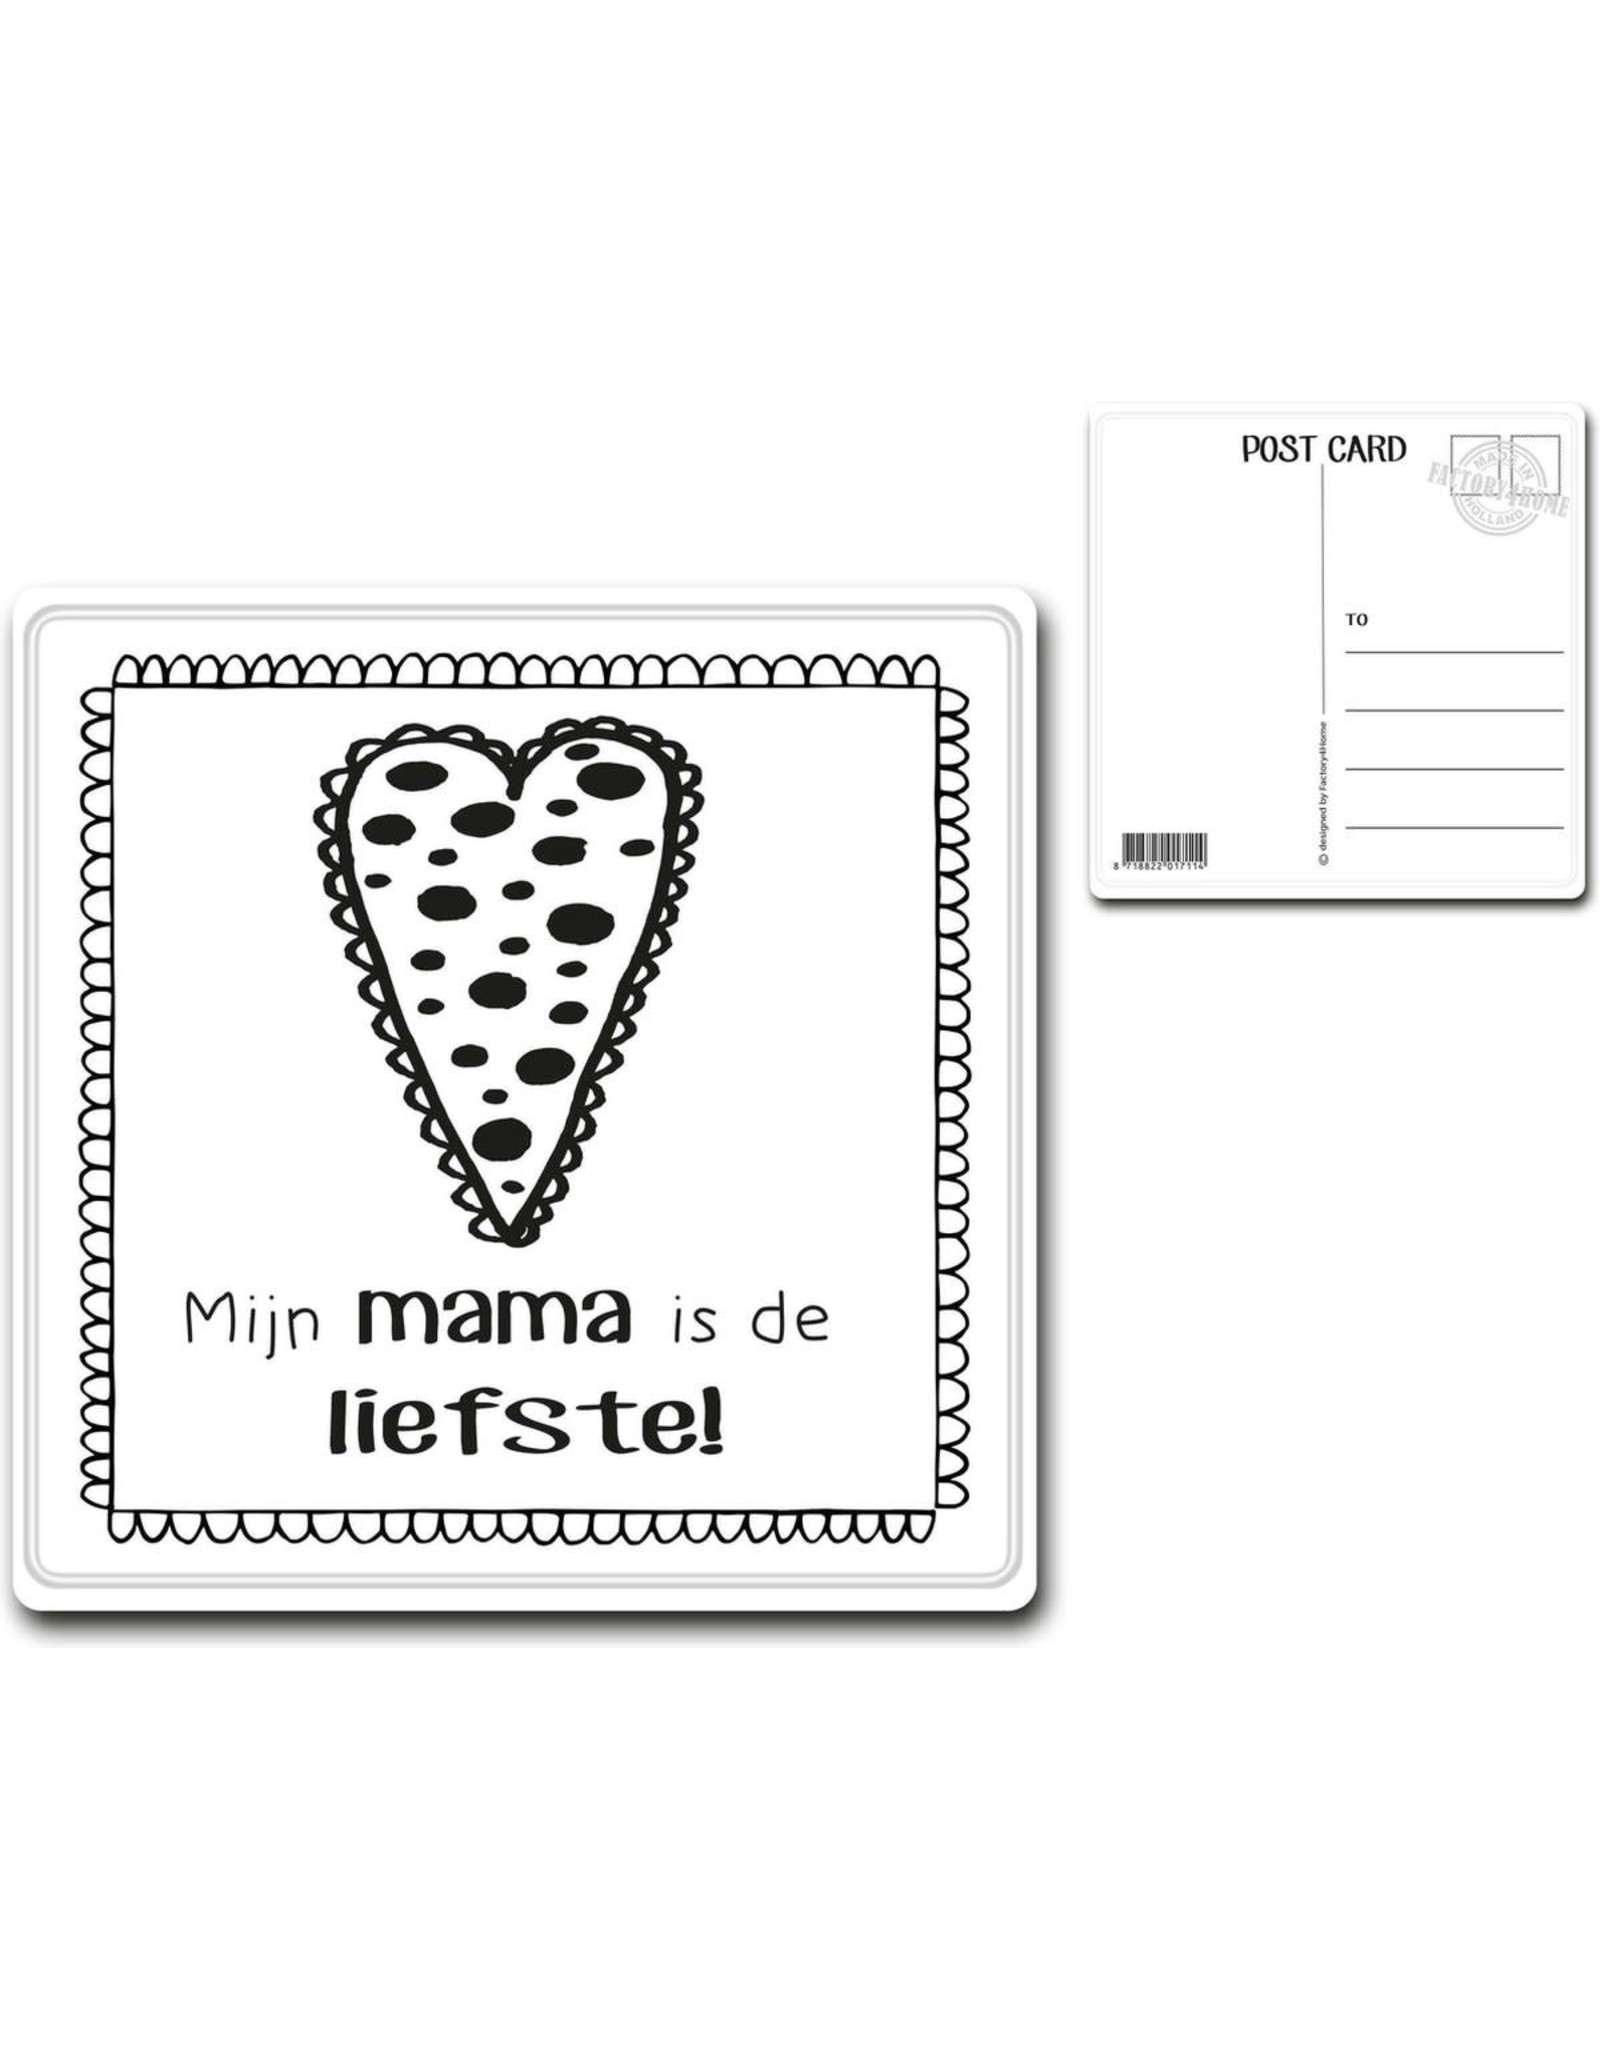 Postcard "Mijn Mama"